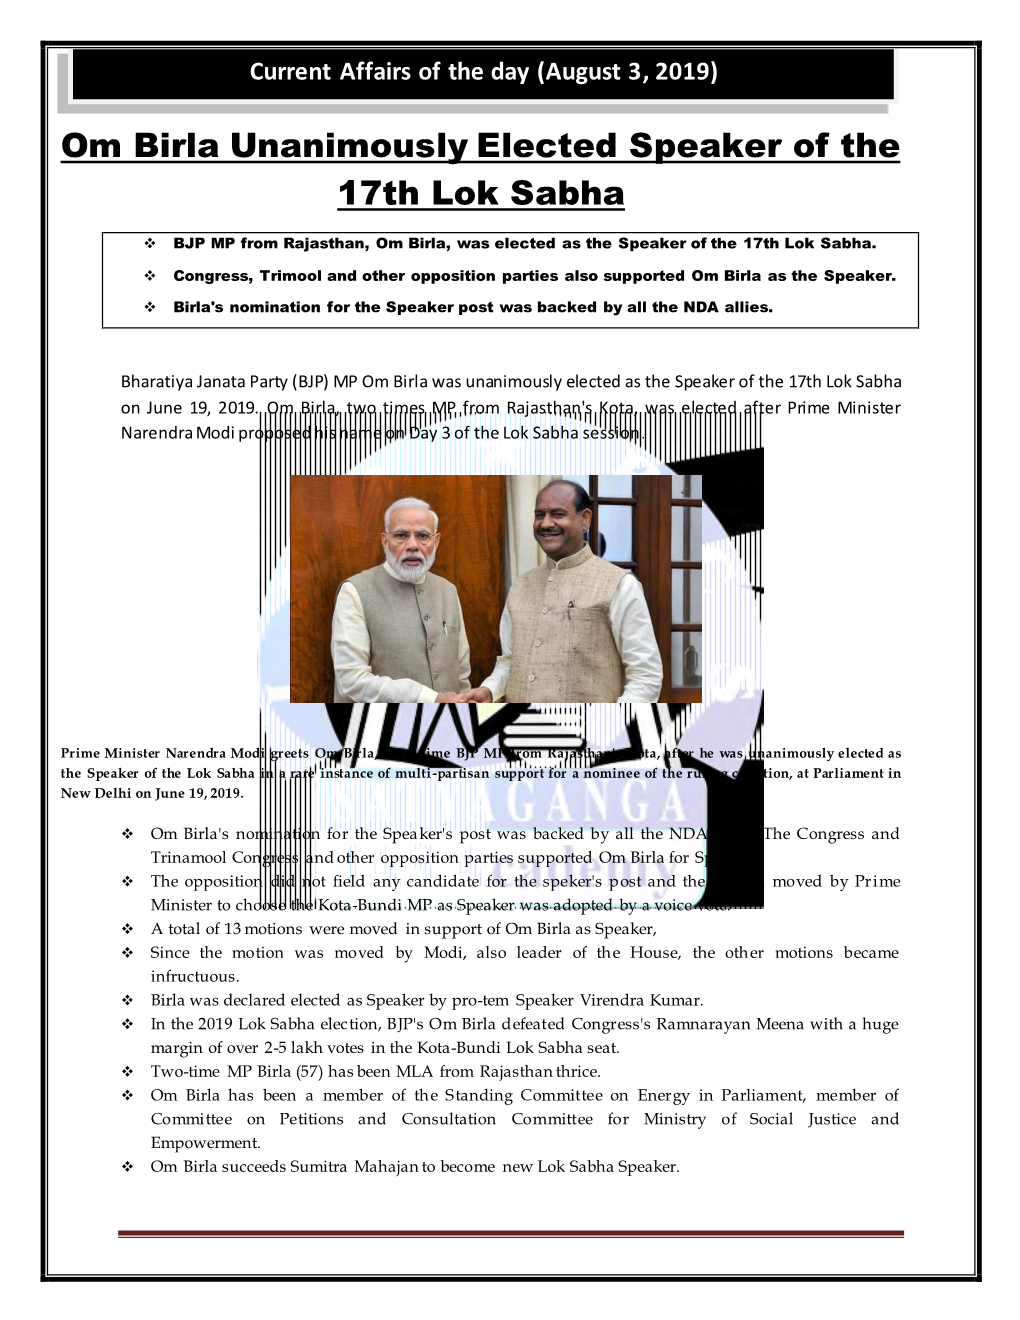 Om Birla Unanimously Elected Speaker of the 17Th Lok Sabha